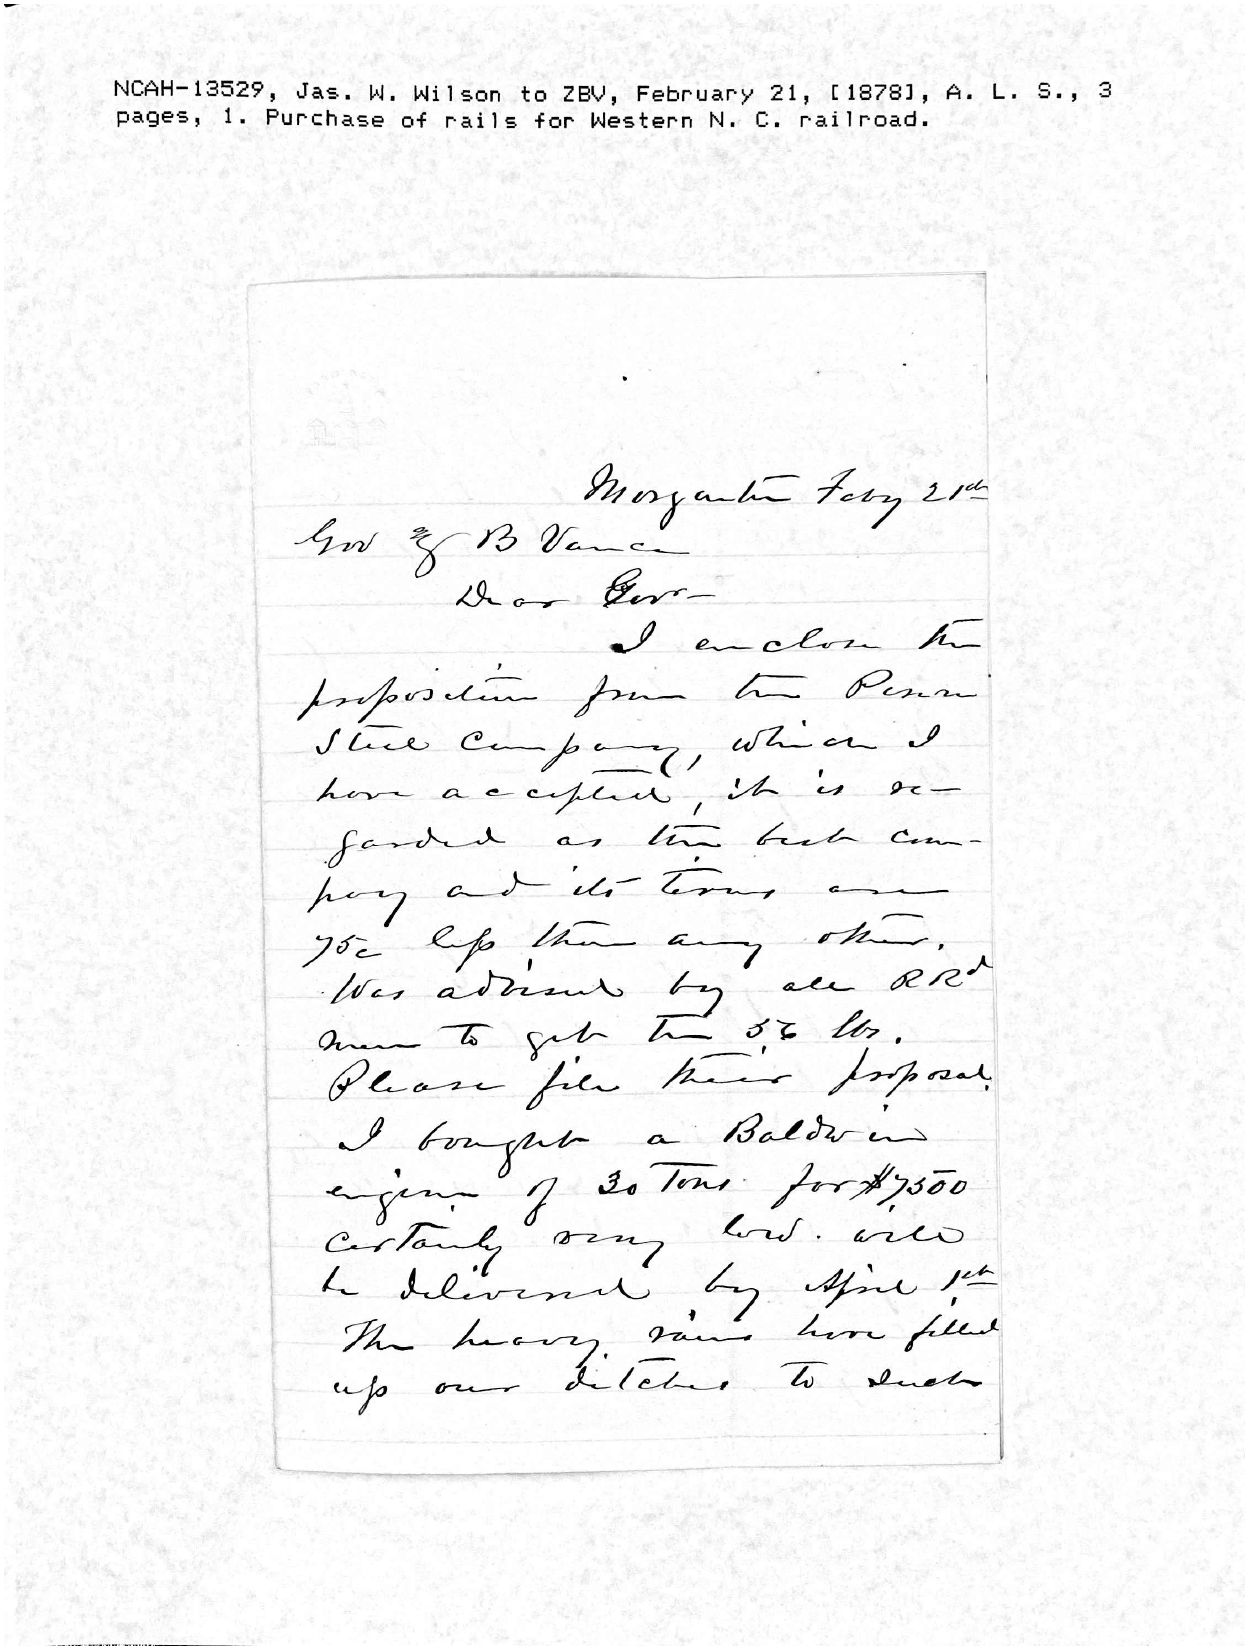 JWW to ZBV, 21 Feb 1878